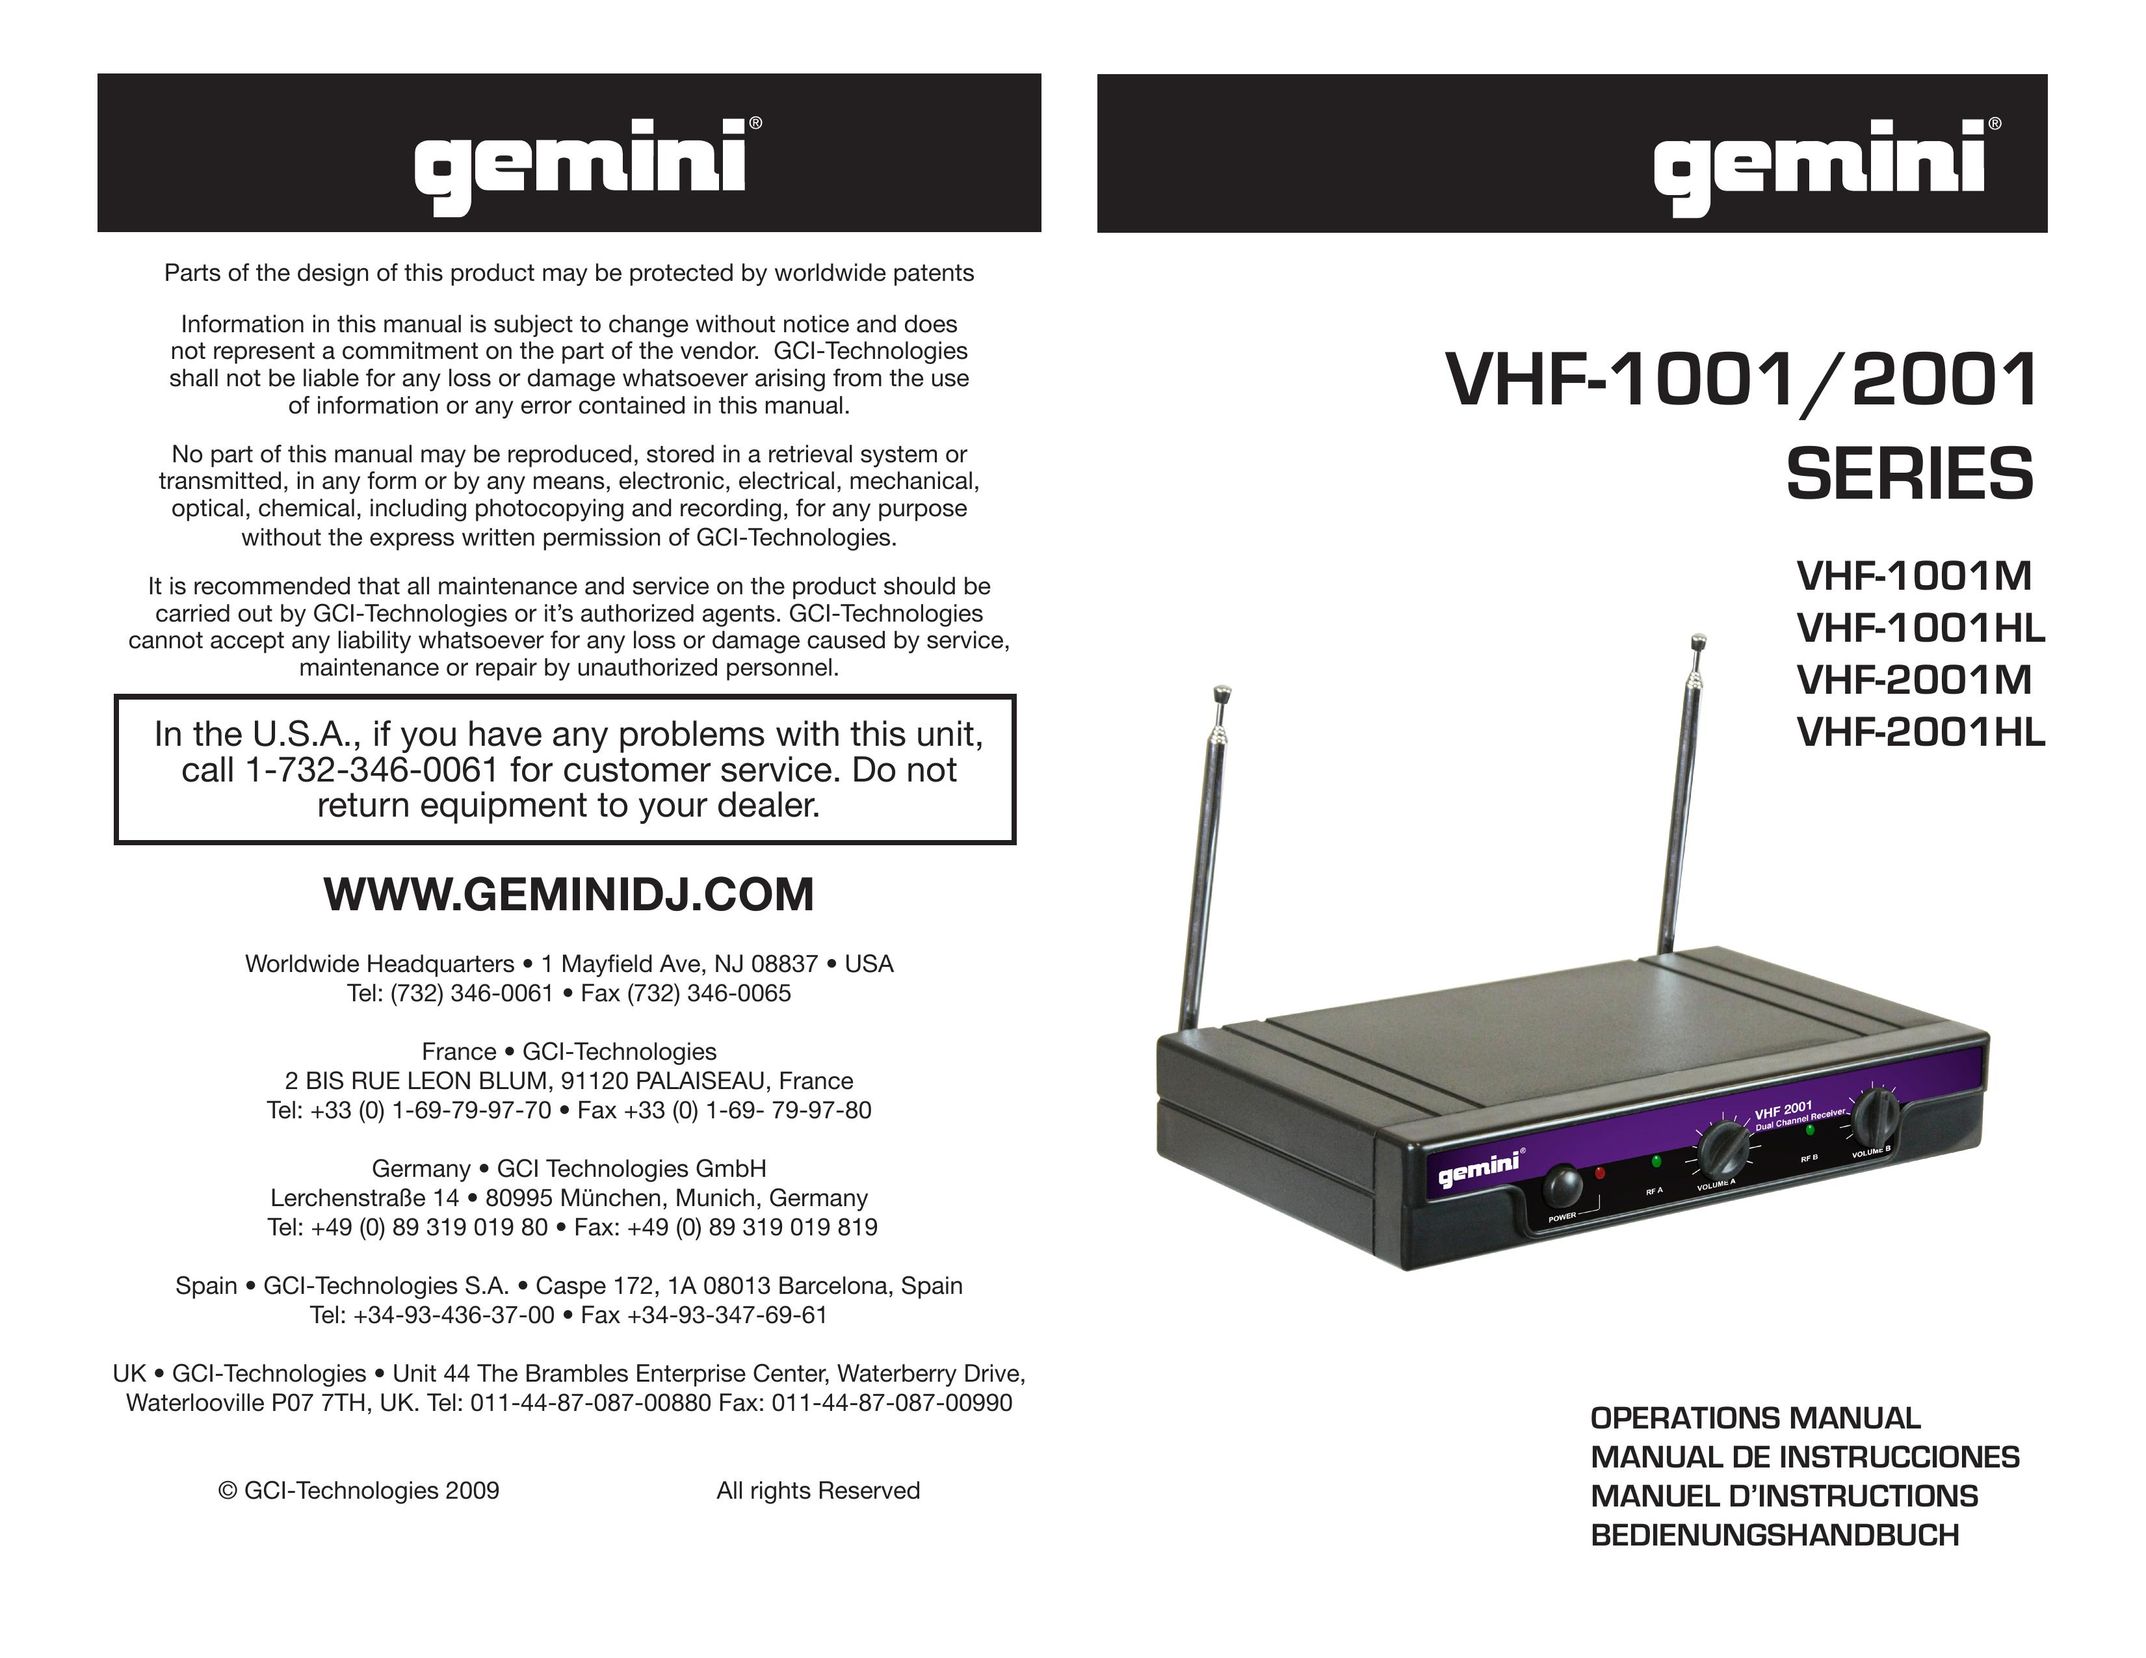 Gemini Industries VHF-2001HL TV Antenna User Manual